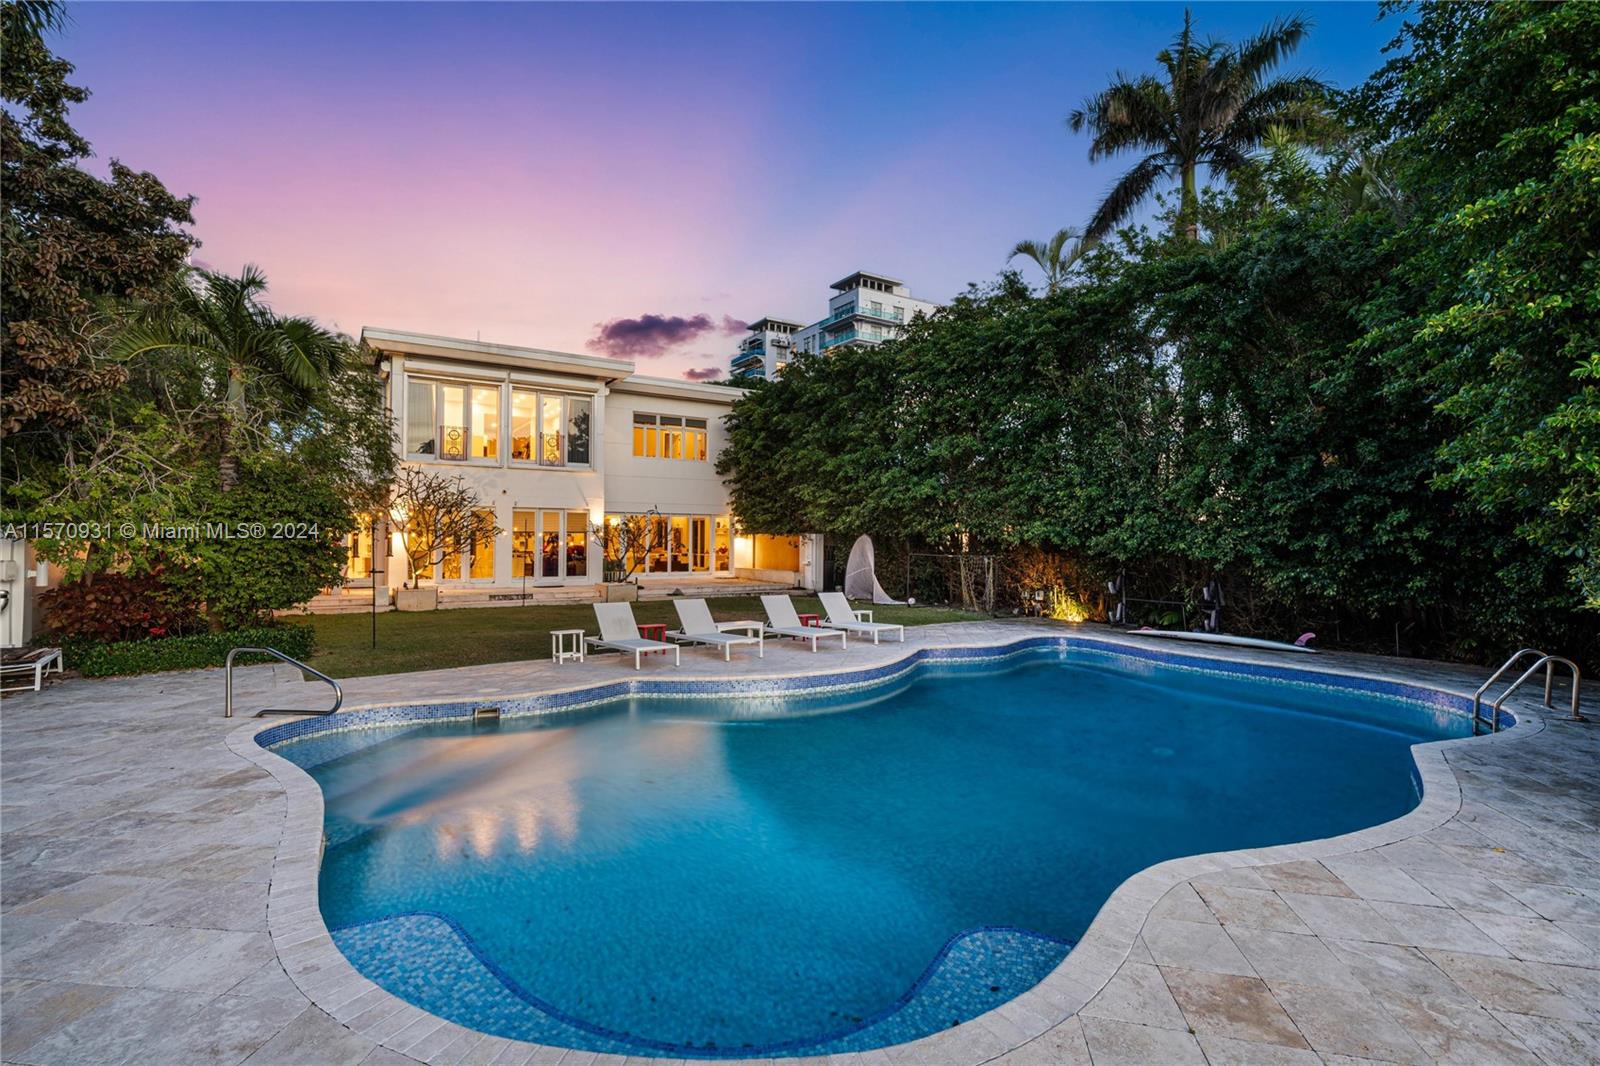 Property for Sale at 6320 Allison Rd Rd, Miami Beach, Miami-Dade County, Florida - Bedrooms: 7 
Bathrooms: 6  - $14,800,000